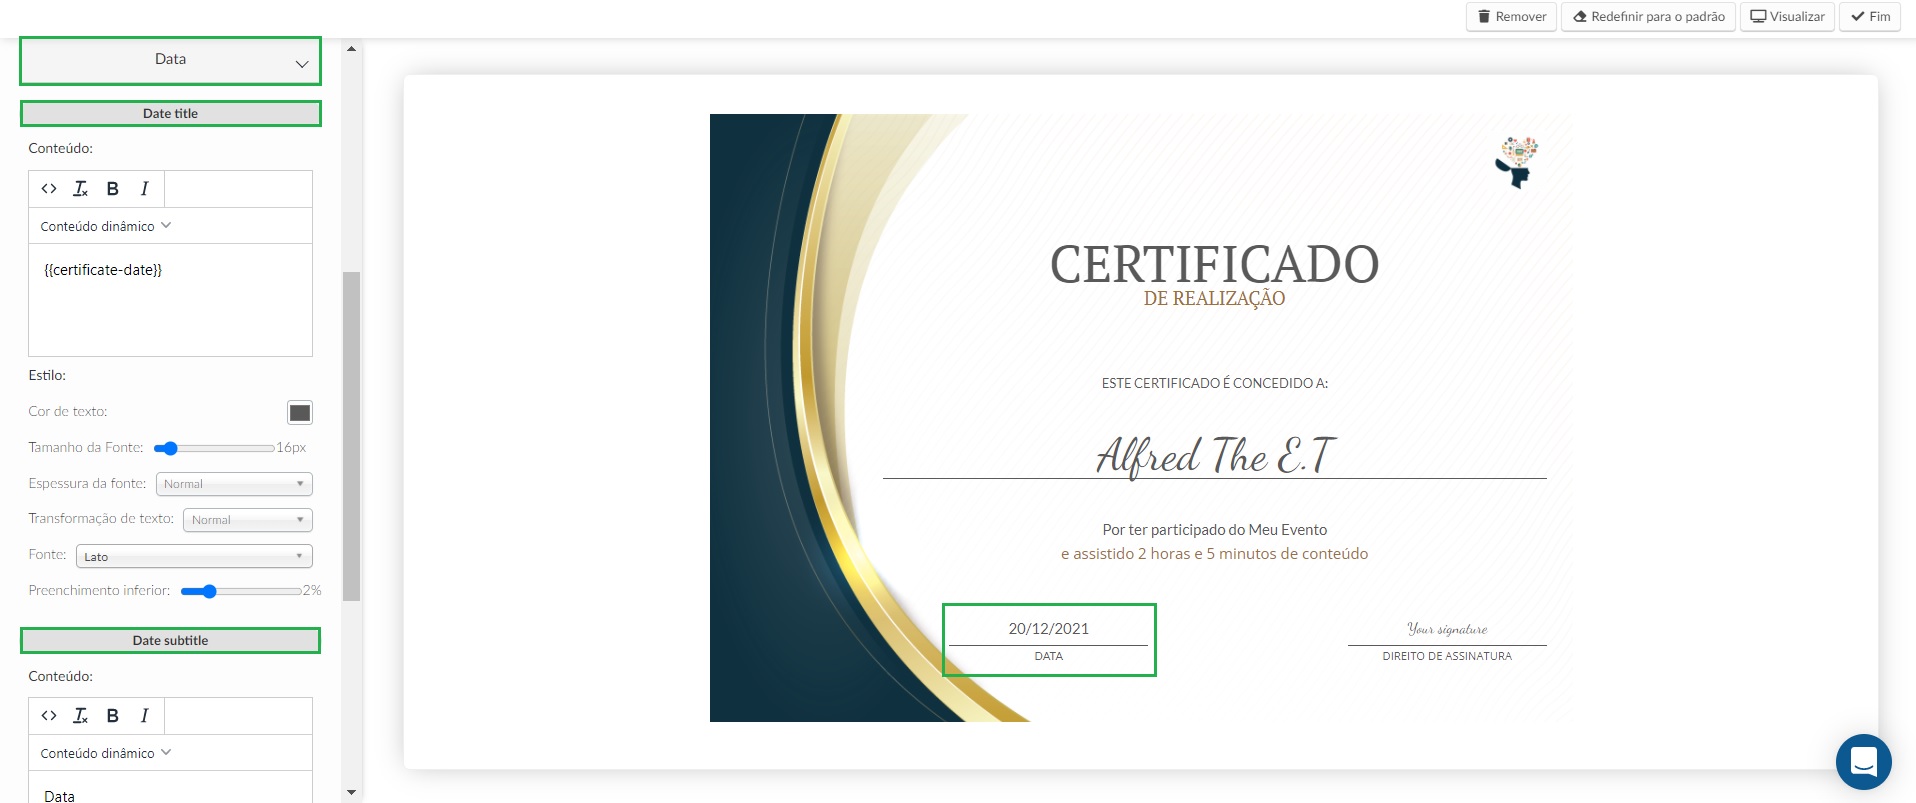 Customizing the certificate date